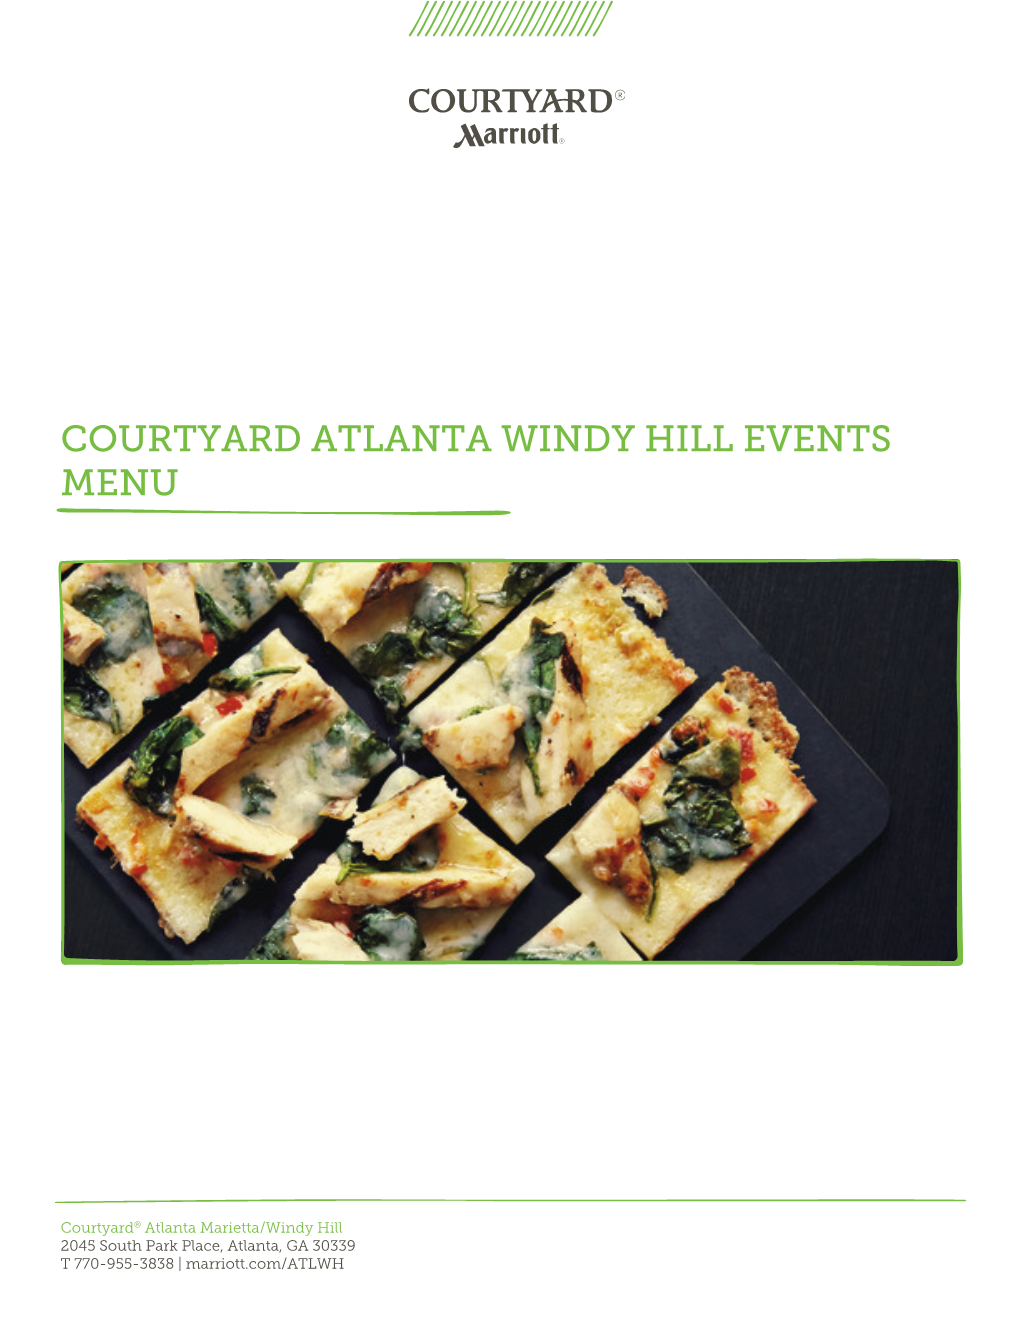 Courtyard Atlanta Windy Hill Events Menu